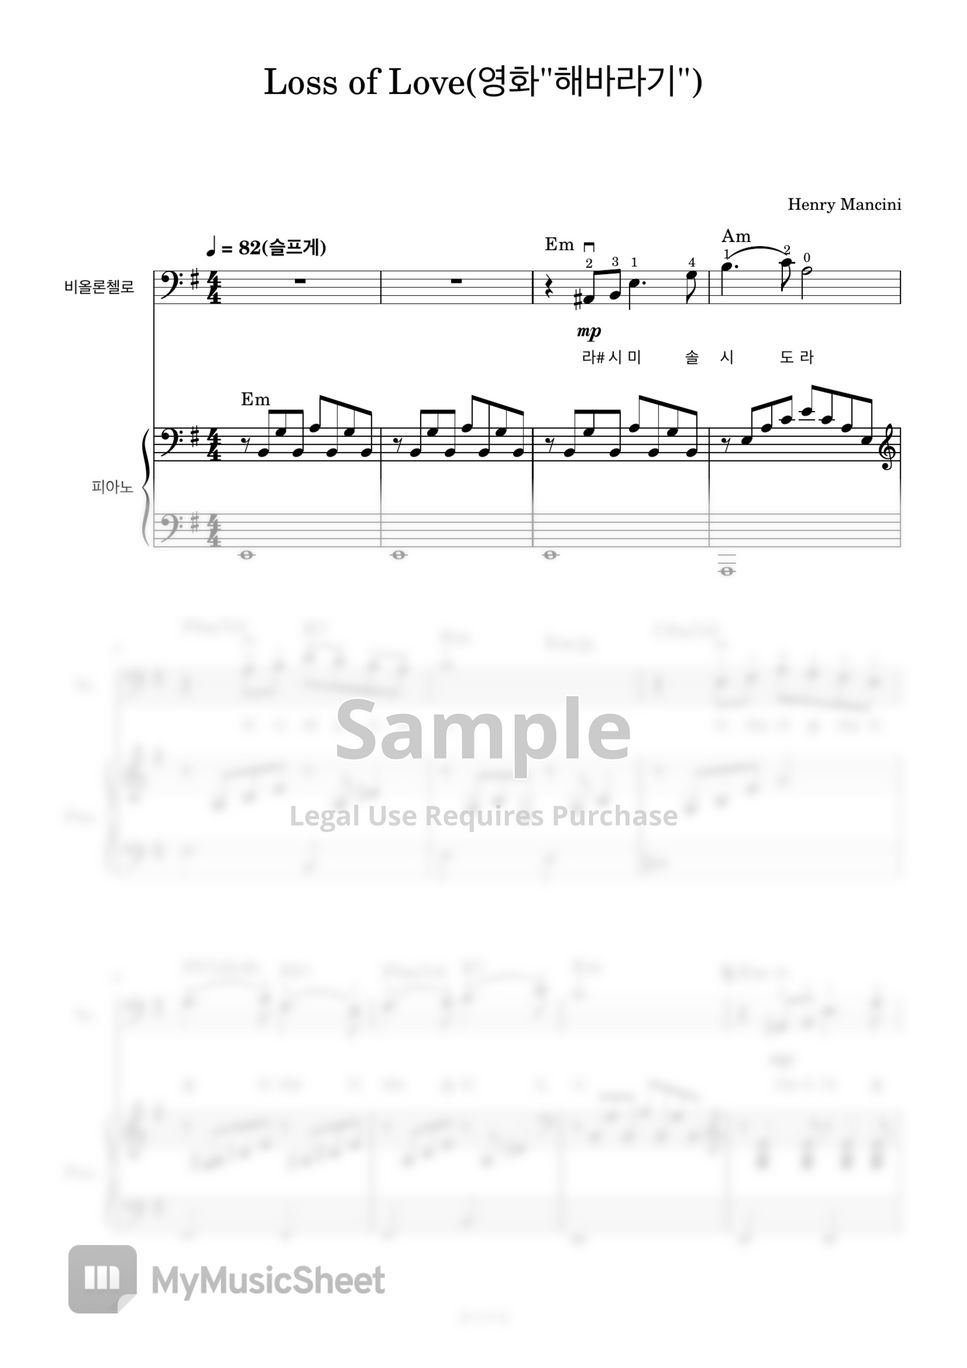 Henry Mancini - Loss of Love (첼로+피아노, 계이름 & 손가락 번호 포함) by 첼로마을